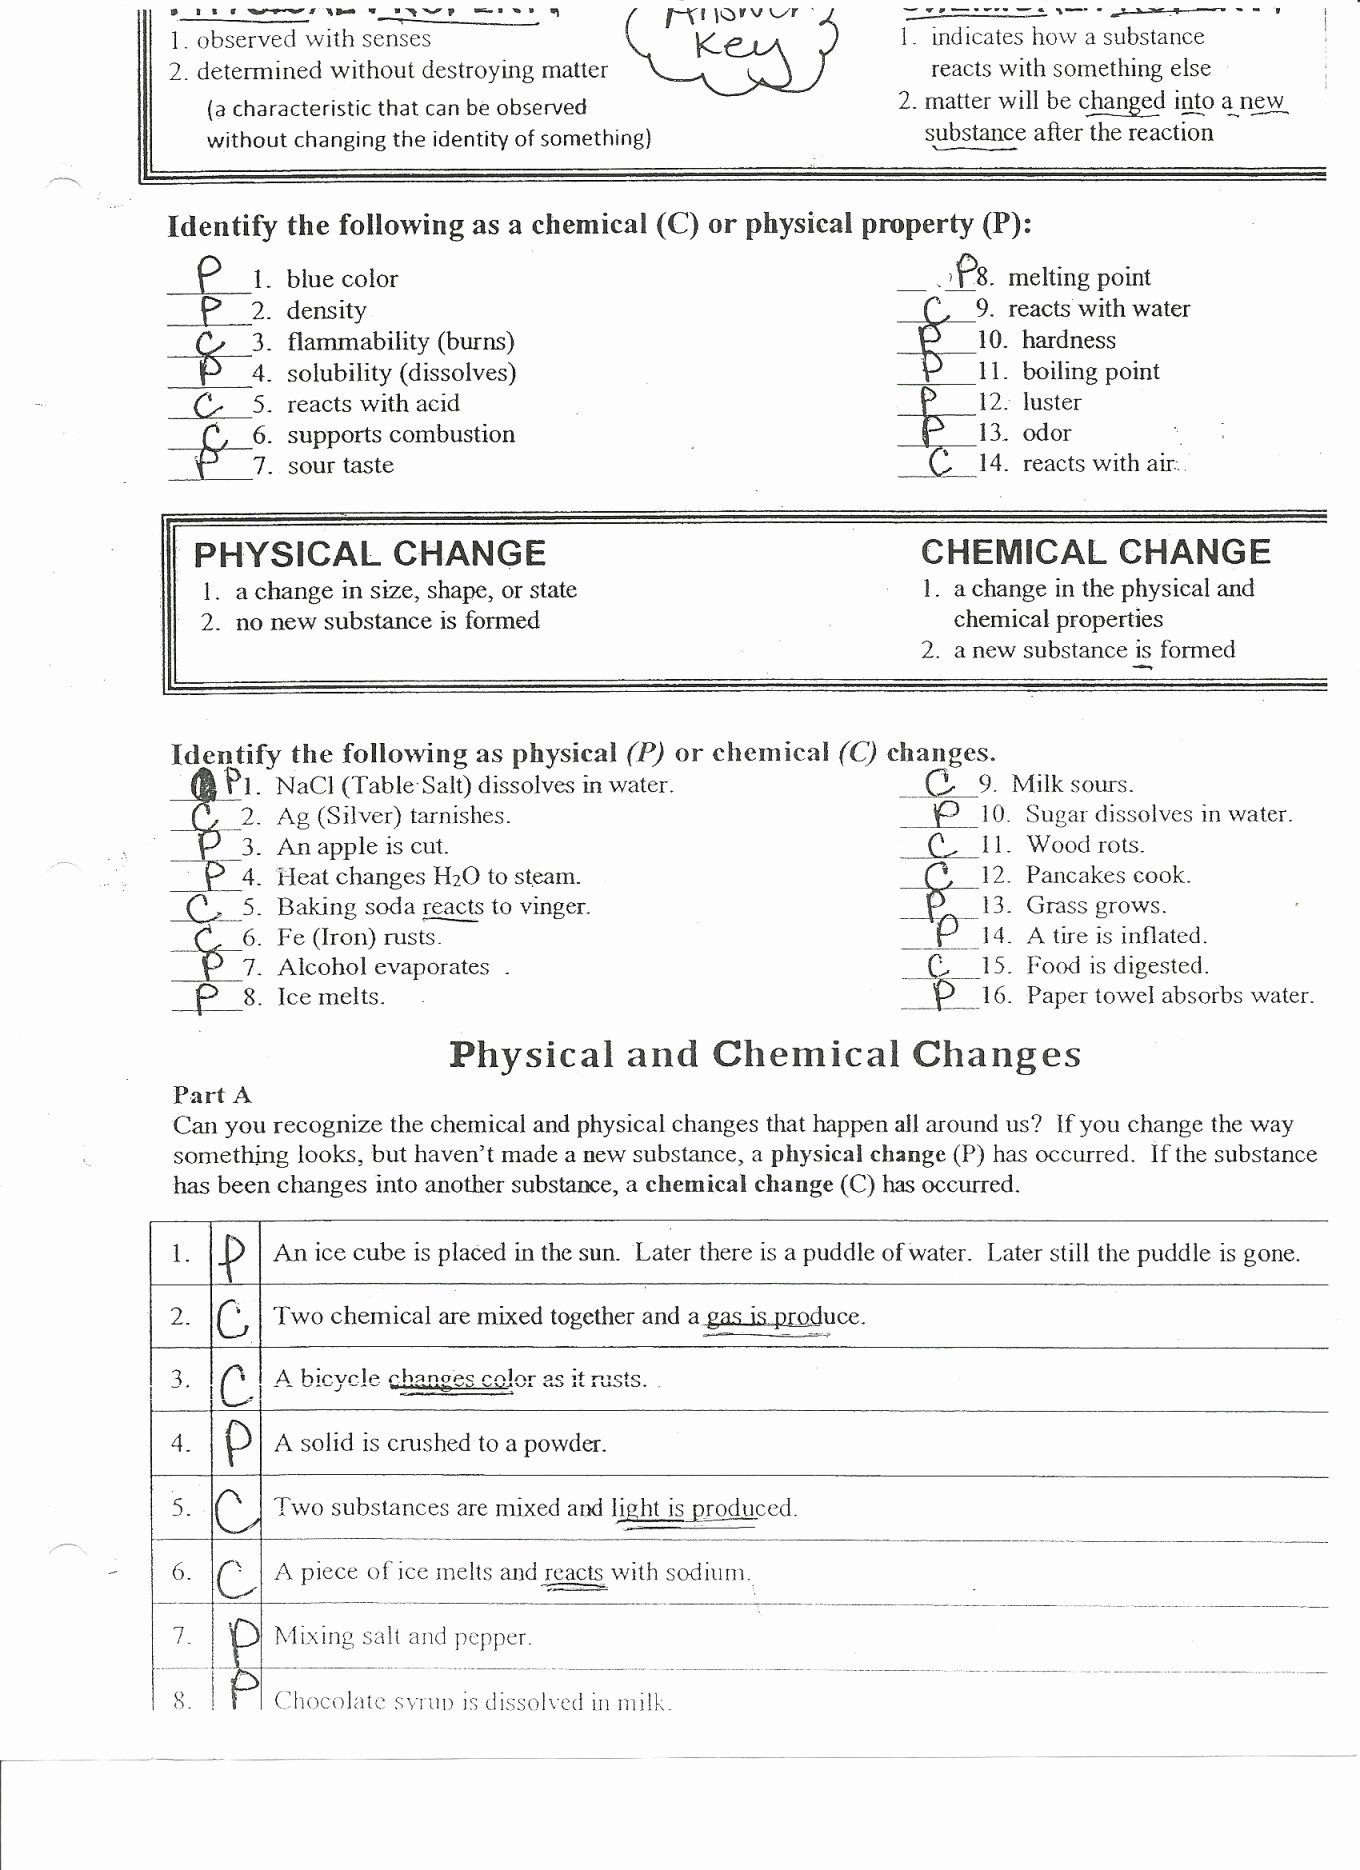 Physical Vs Chemical Properties Worksheet Inspirational Physical and Chemical Changes Worksheet